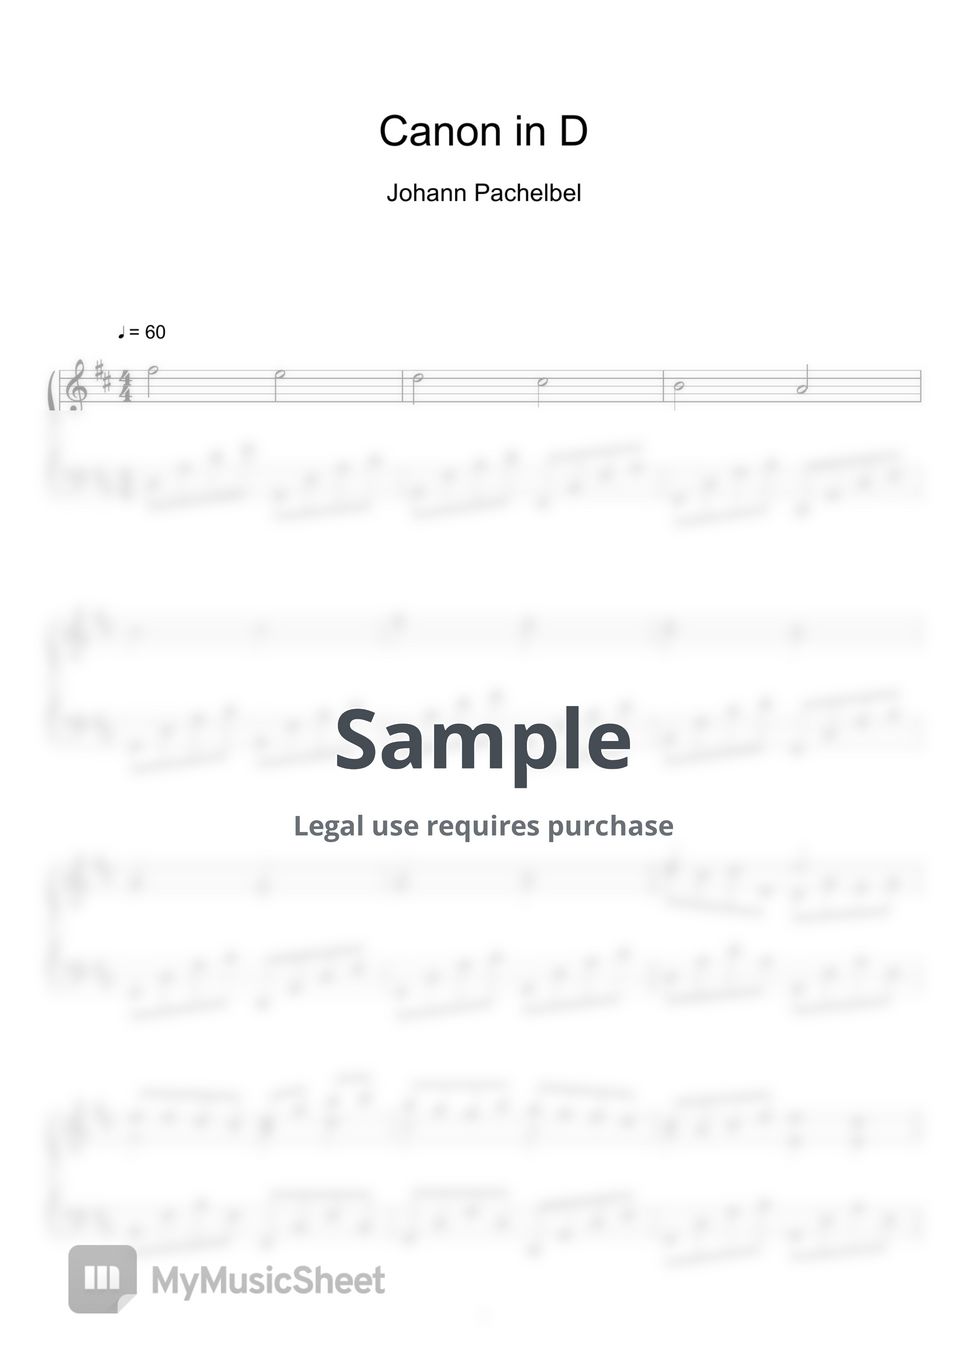 Johann Pachelbel - Canon in D (Sheet Music, MIDI,) by sayu